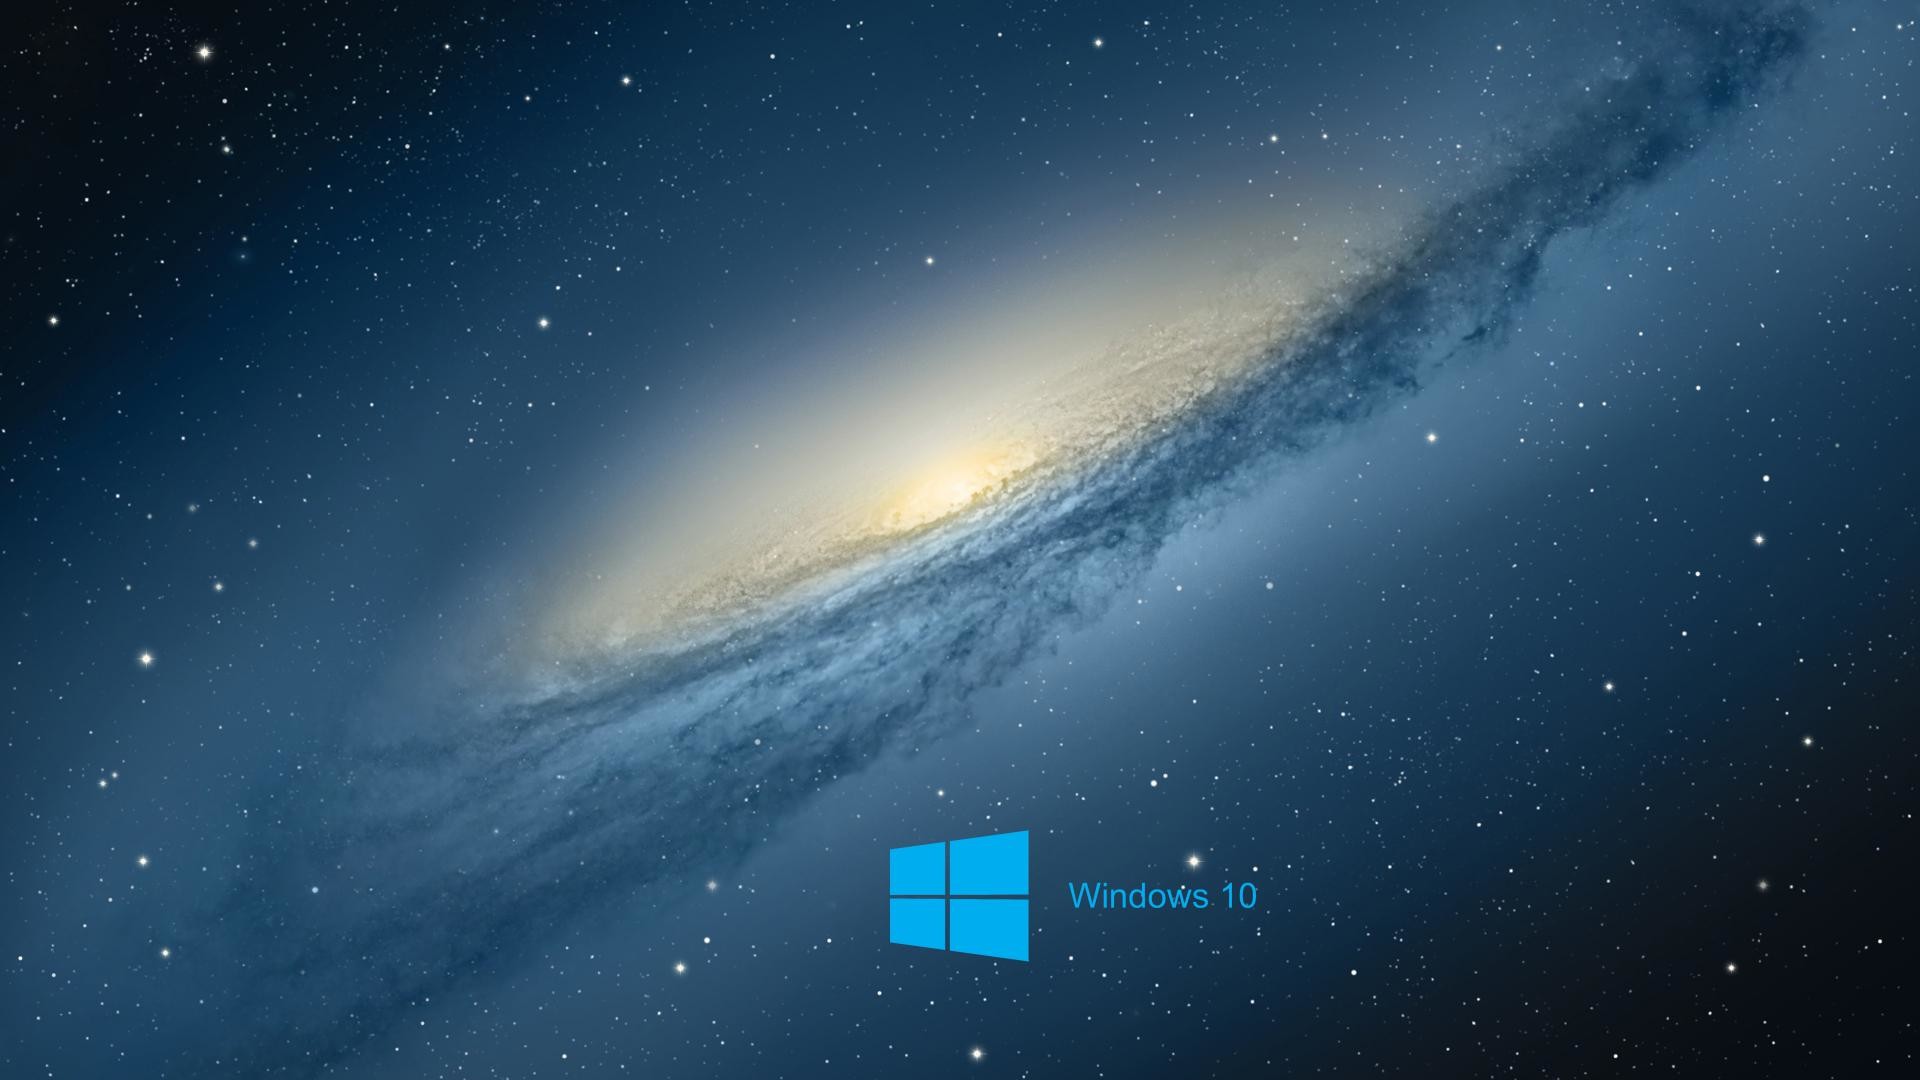 Windows 10 Desktop Background with Scientific Space Planet Galaxy .